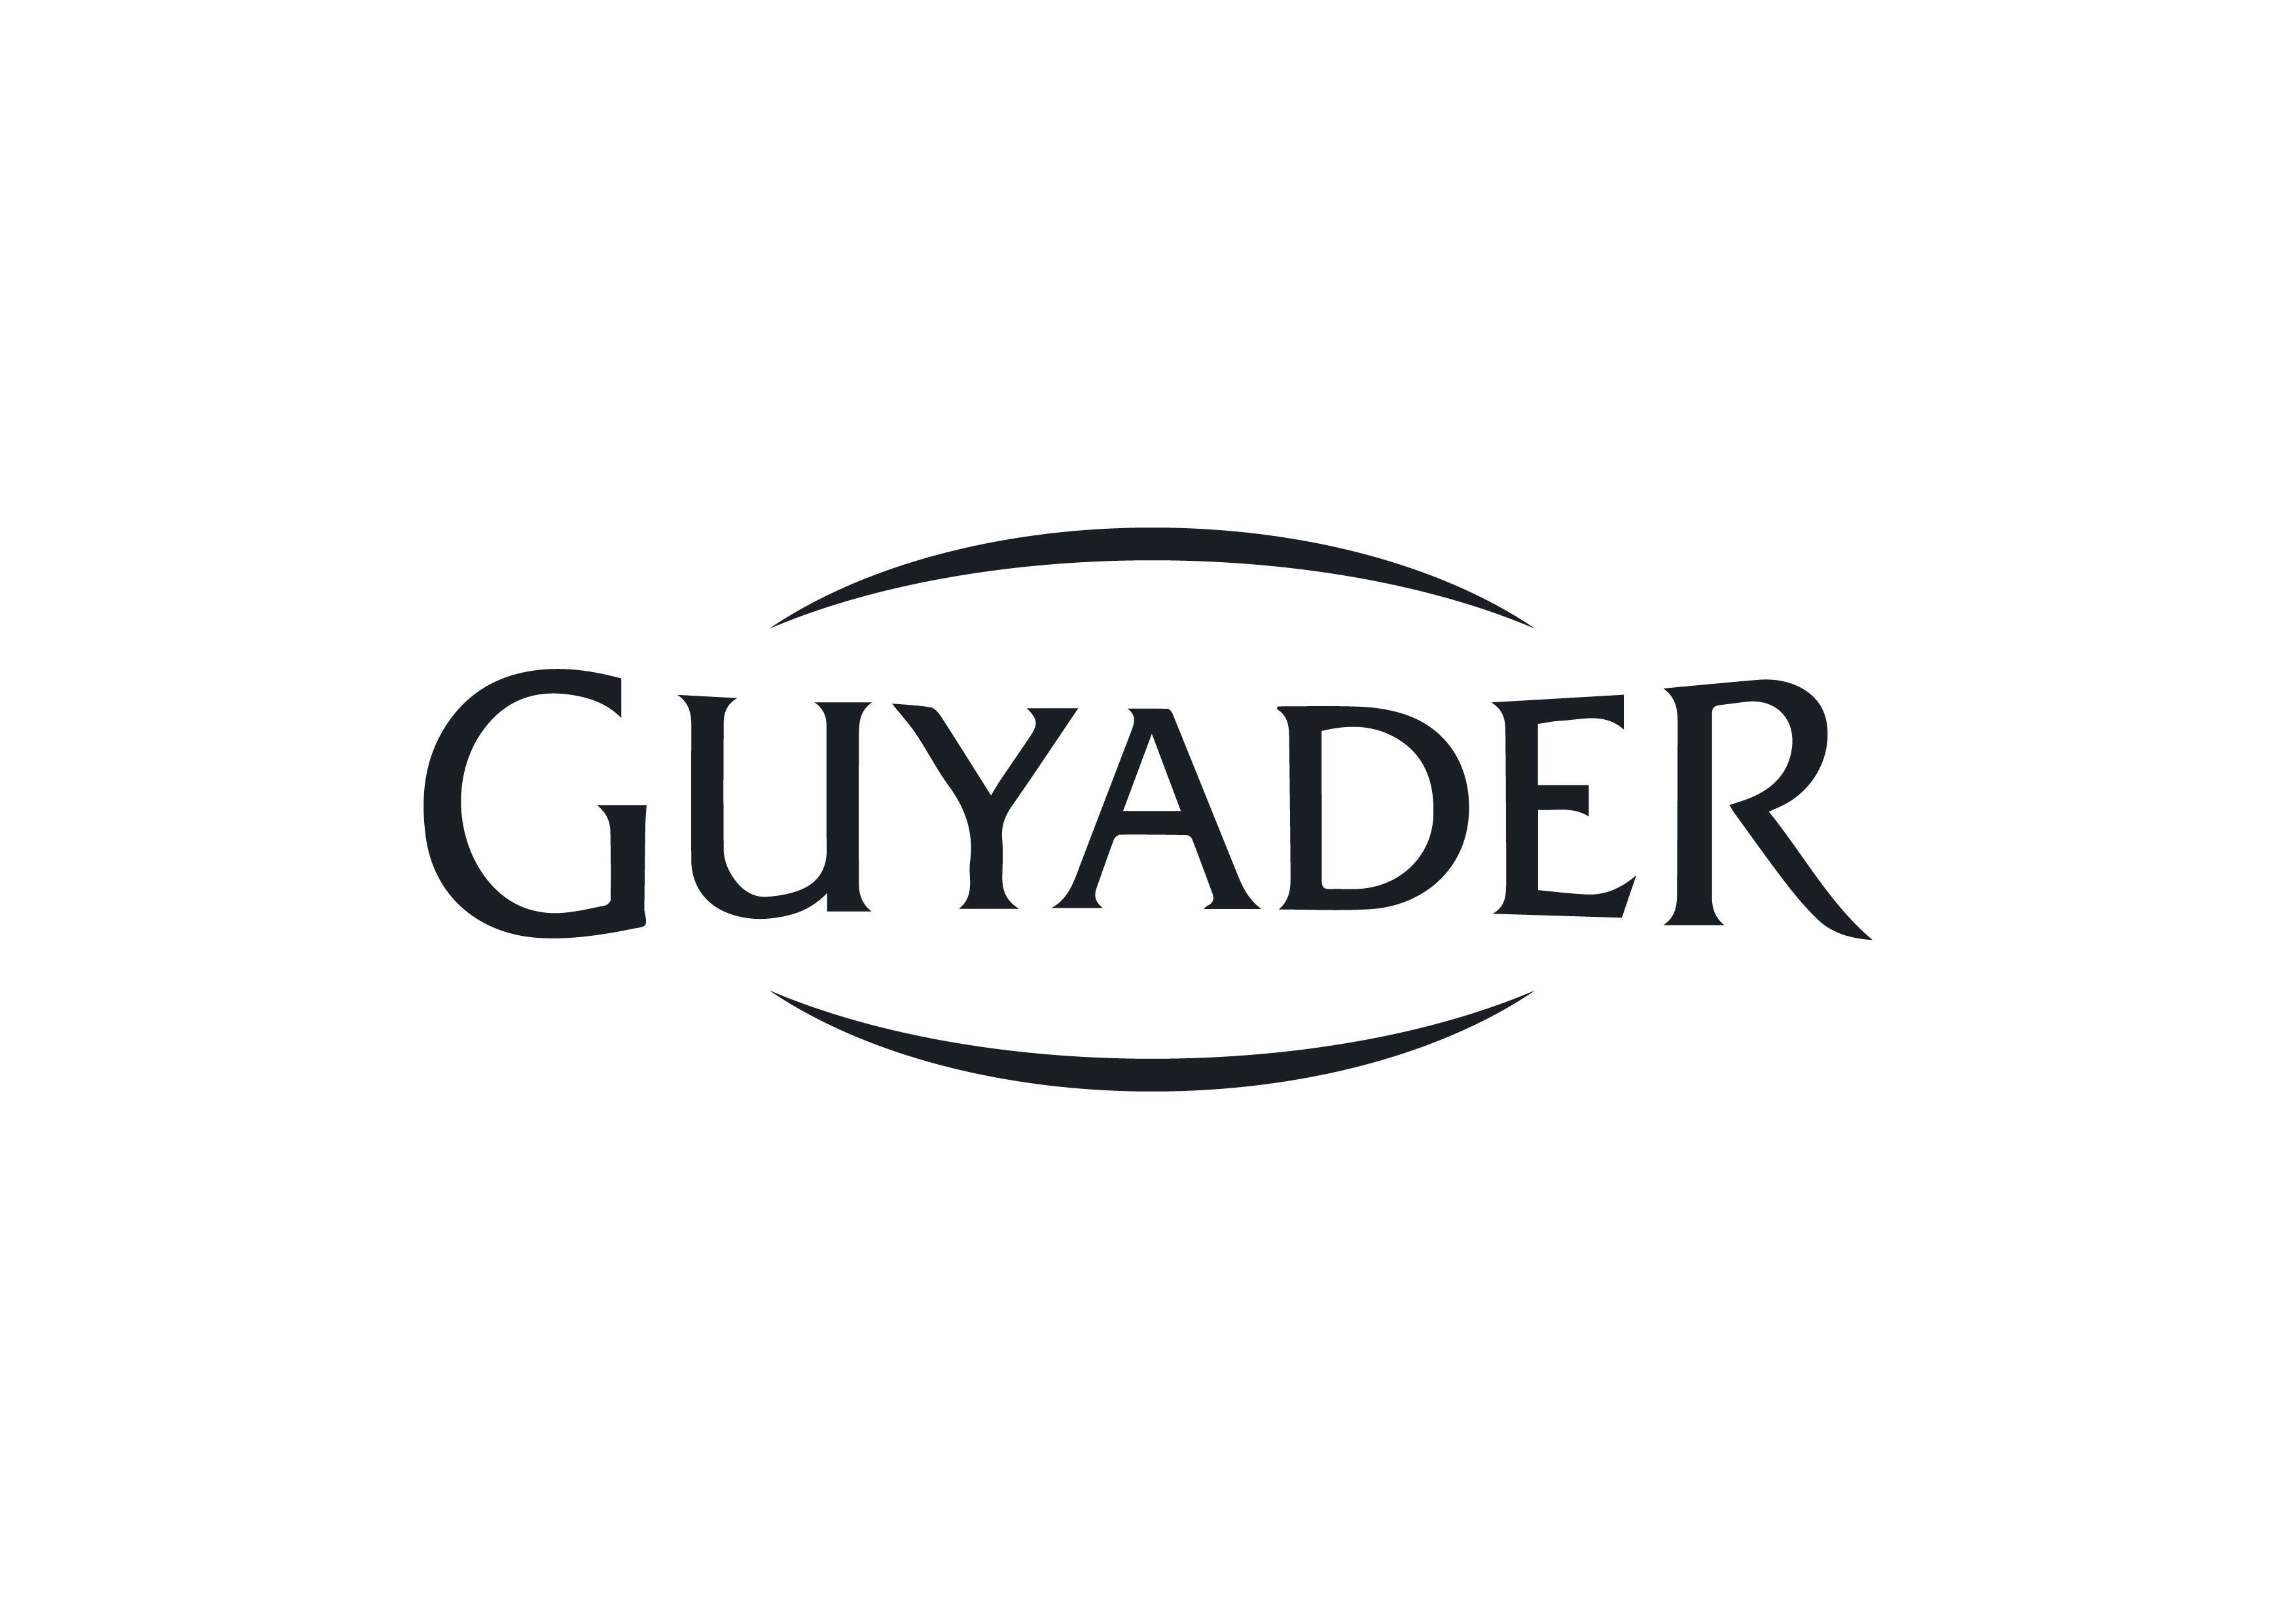 Guyader